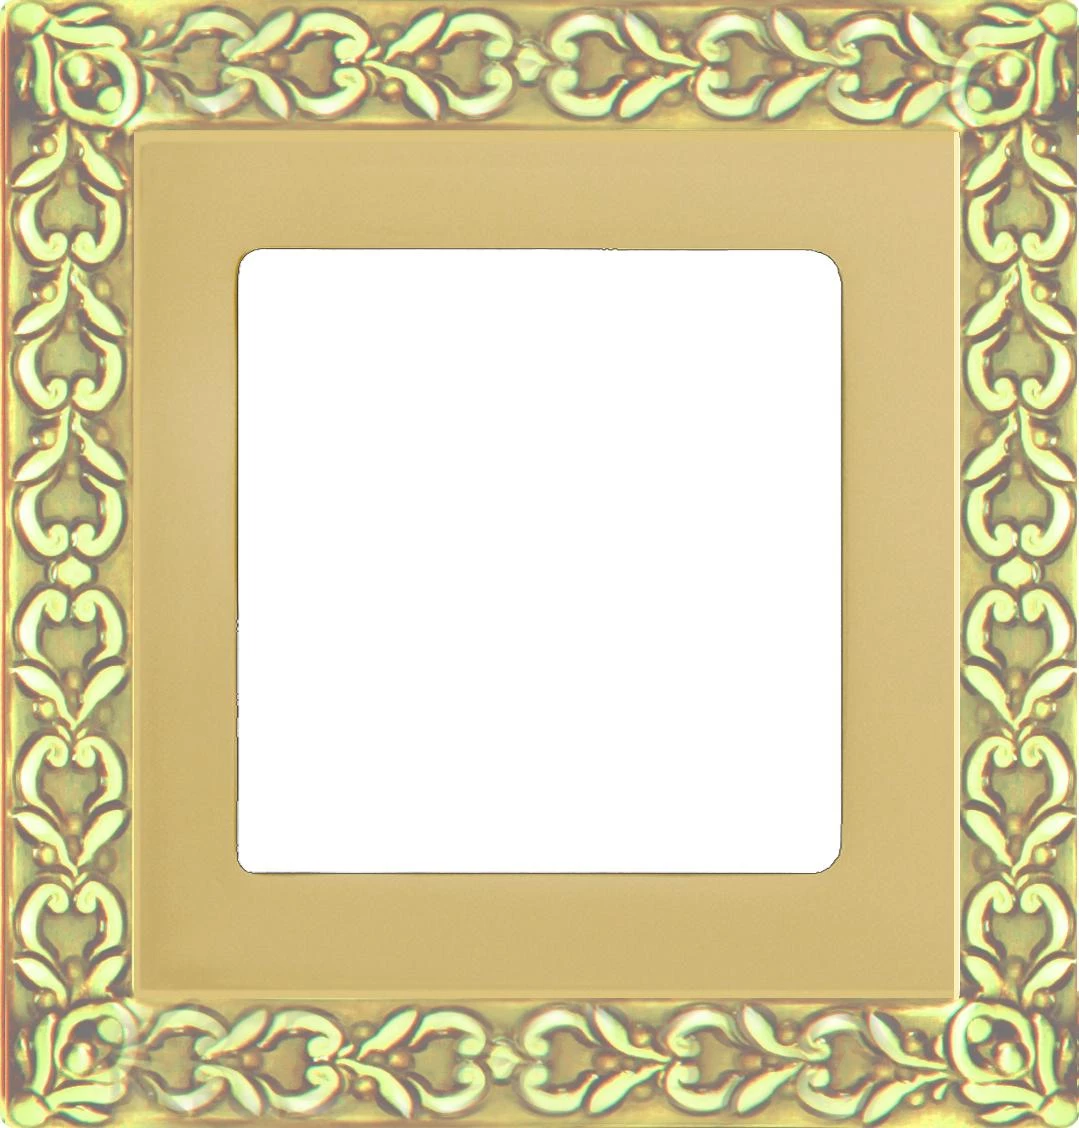  артикул FD01221OB название Рамка 1-ая (одинарная), цвет Светлое золото, San Sebastian, Fede